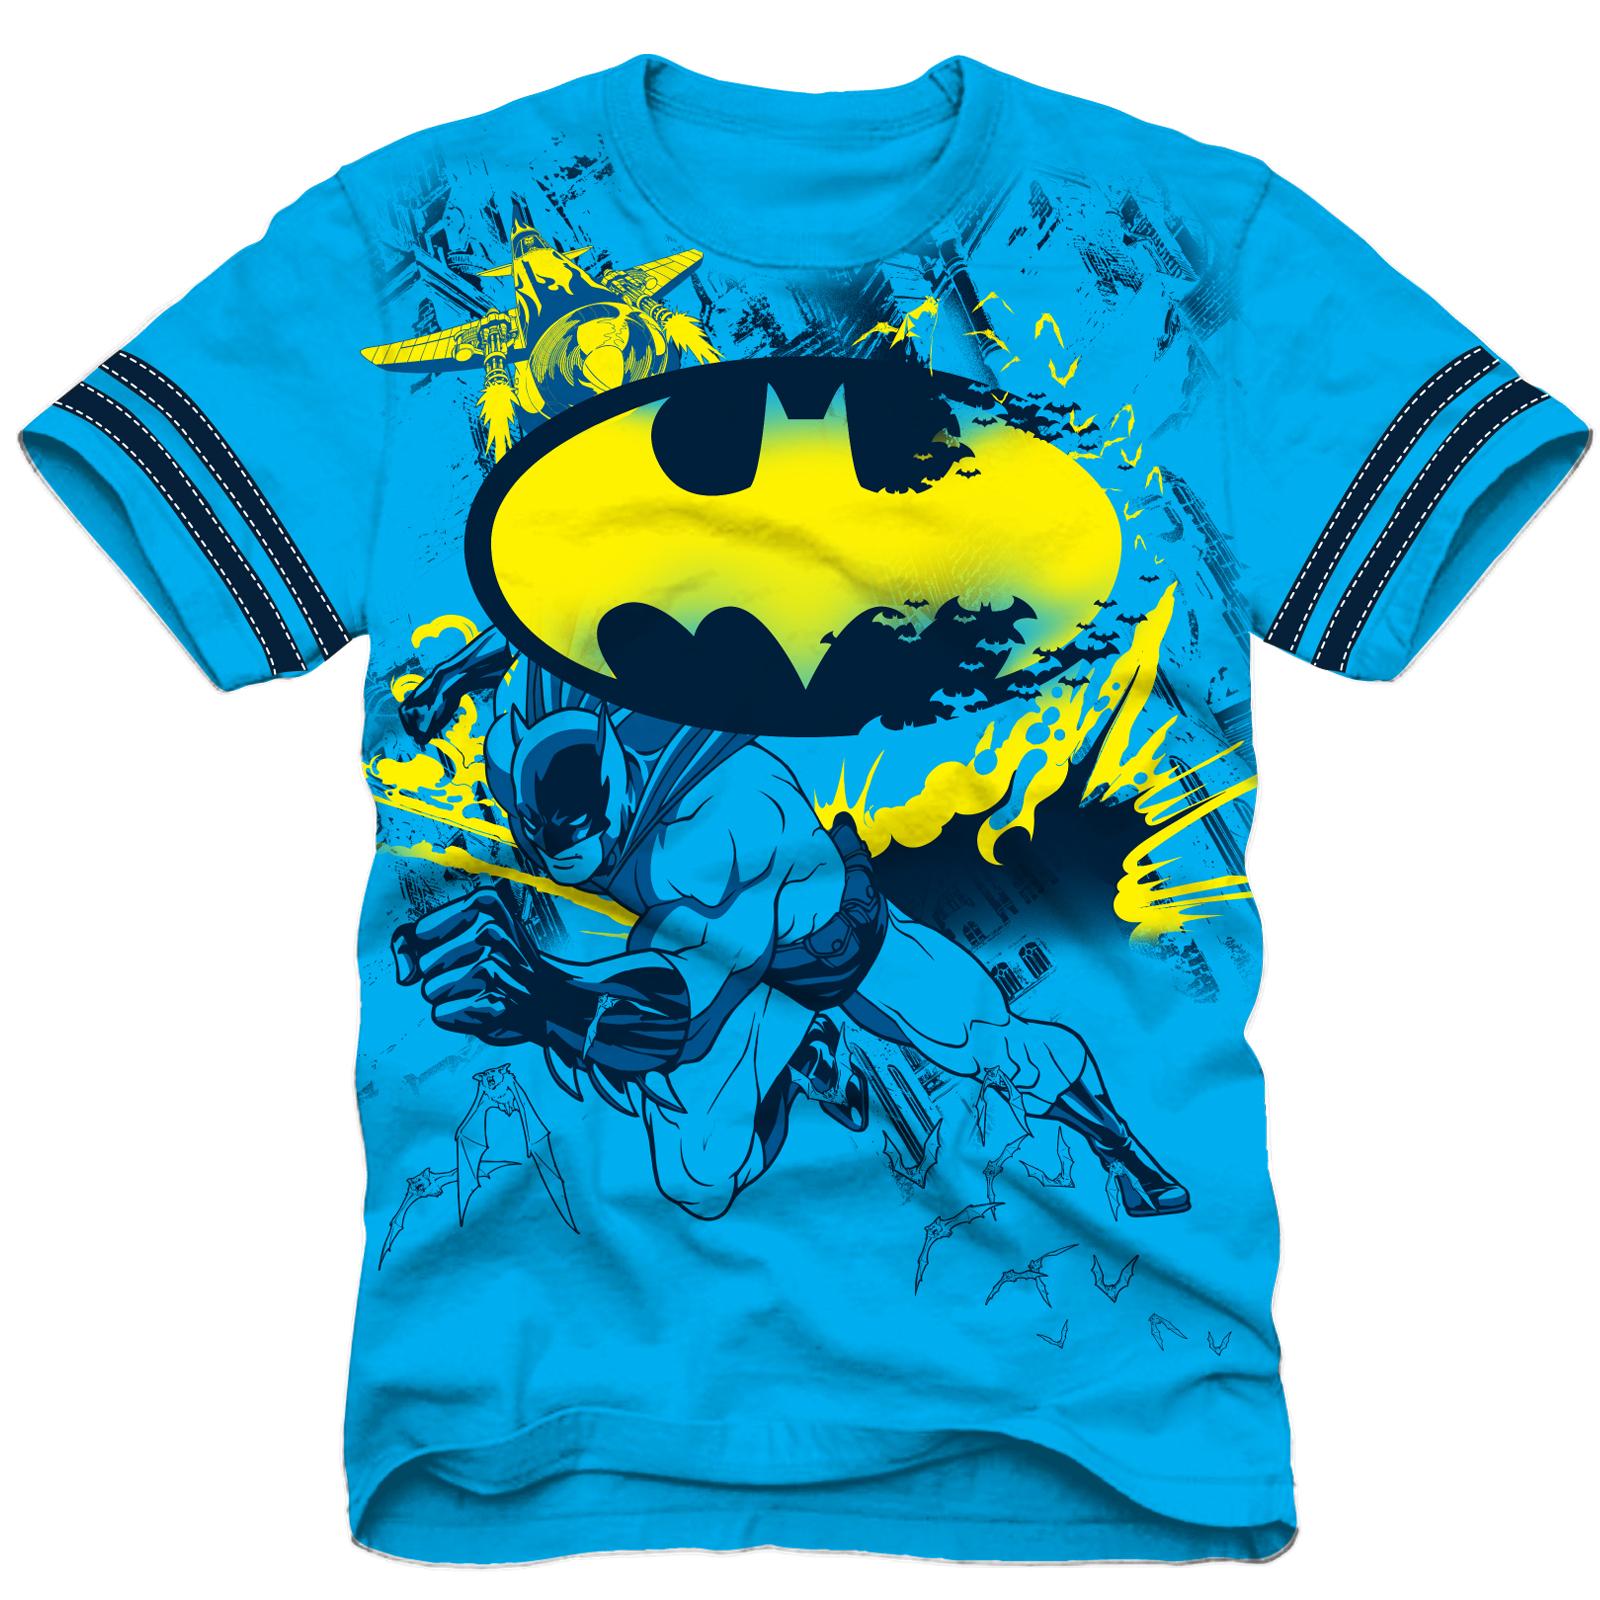 DC Comics Batman Boy's Graphic T-Shirt